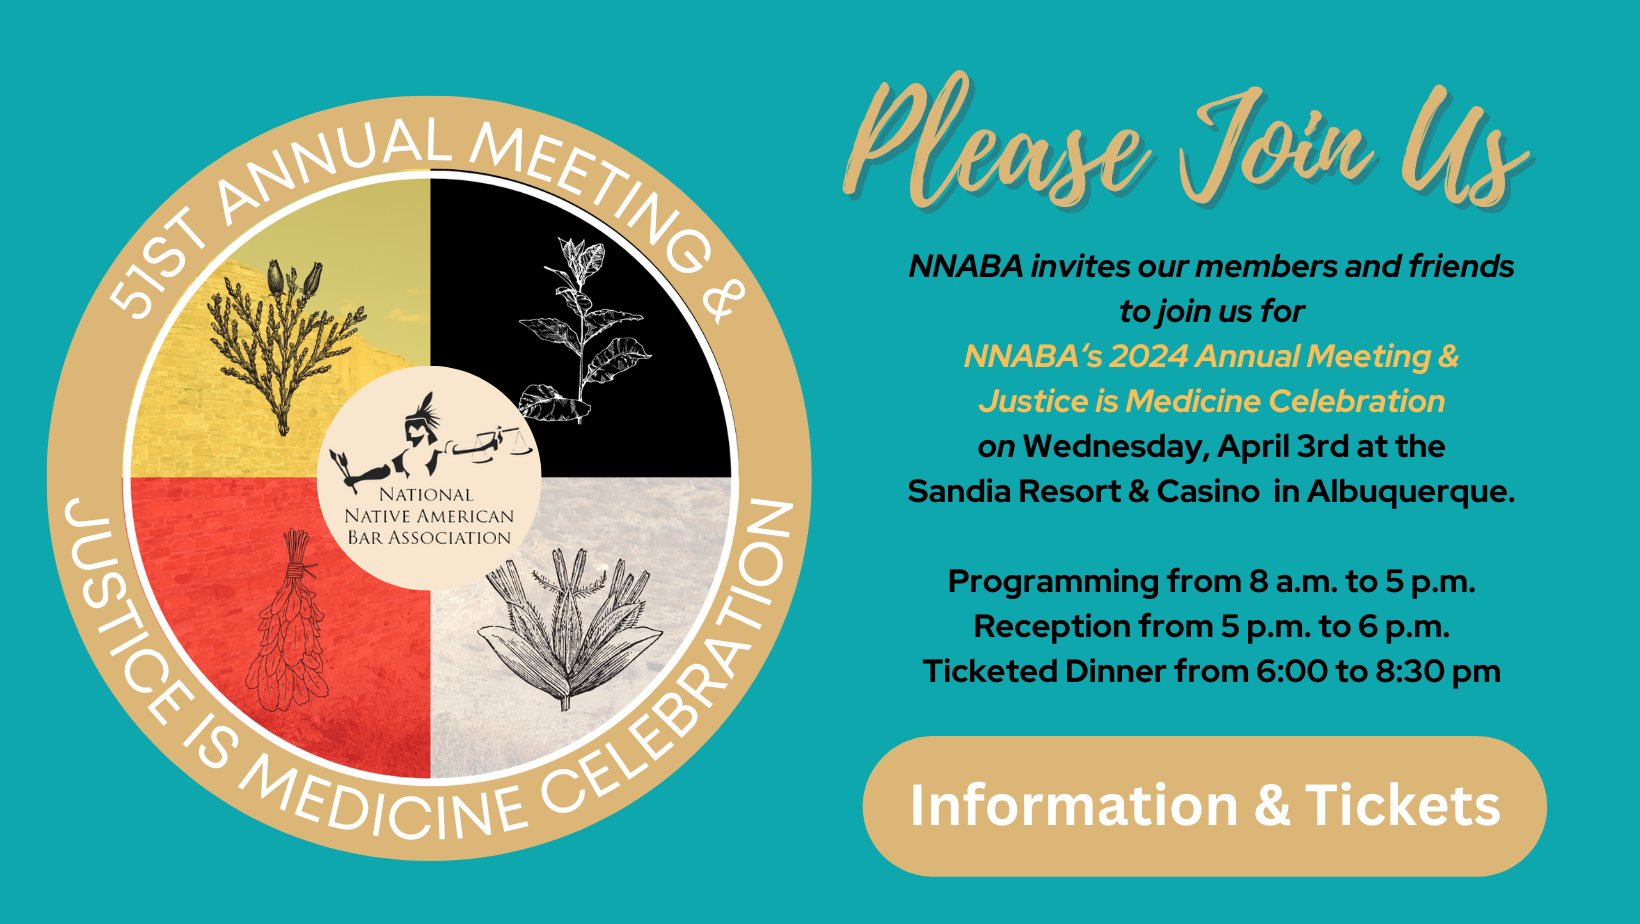 NNABA 51st Annual Meeting Sponsorship & Individual Dinner Registration Information 